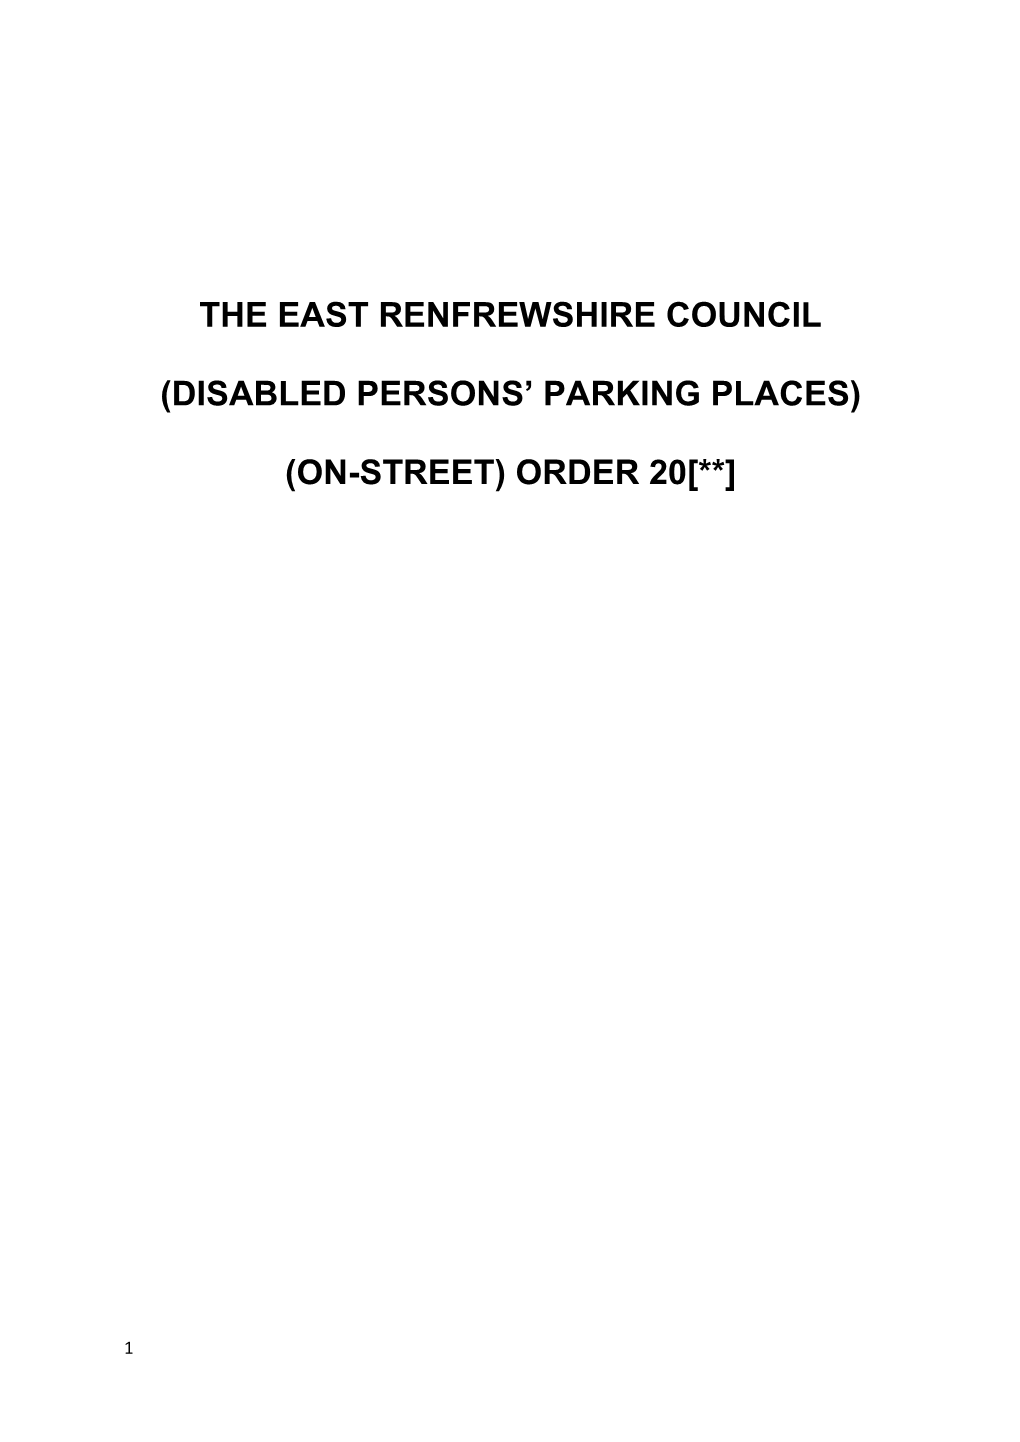 The East Renfrewshire Council